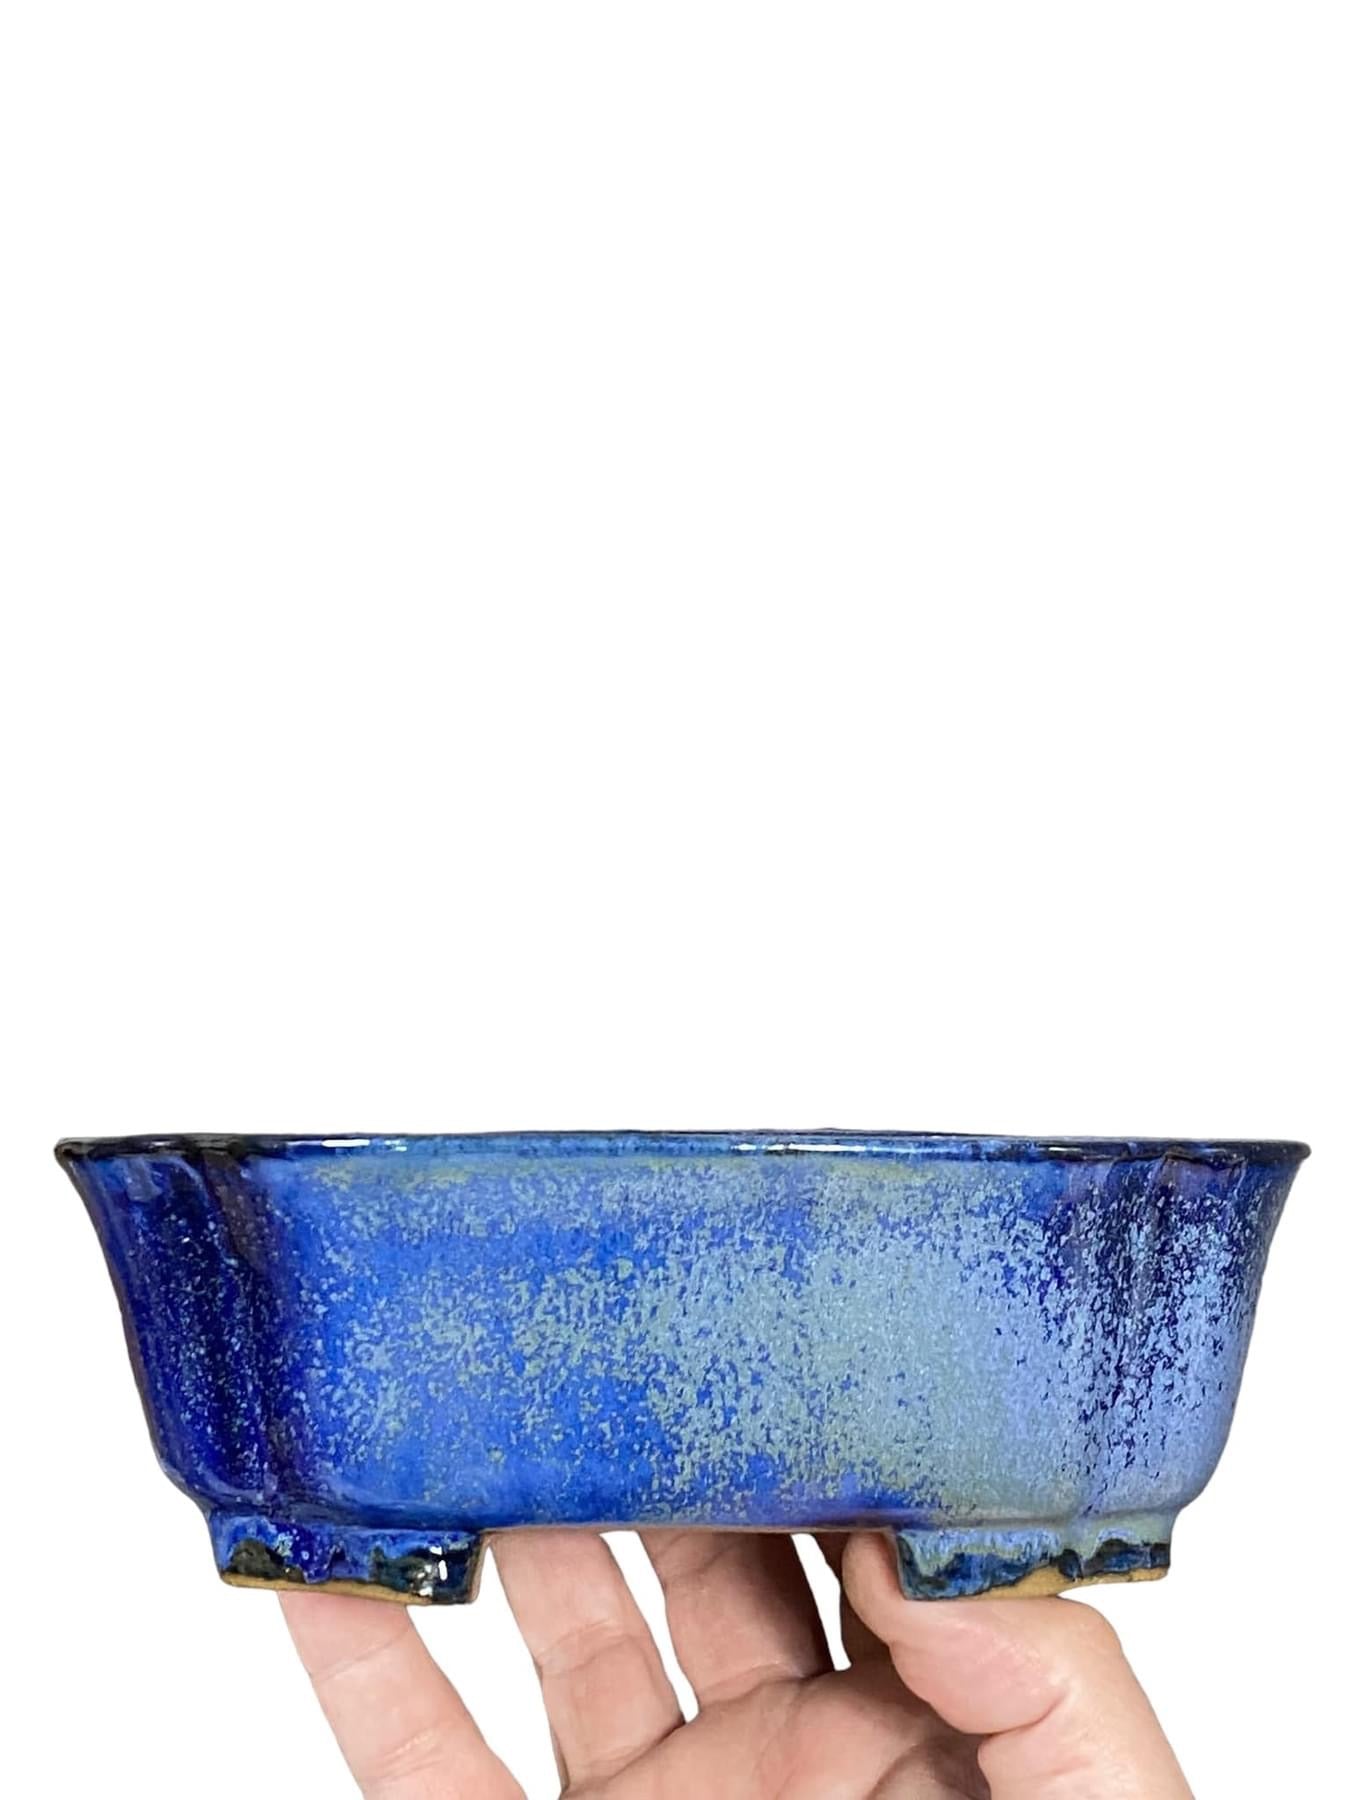 Shibakatsu - Lovely Namako Blue Glazed Bonsai Pot (7-5/16” wide)